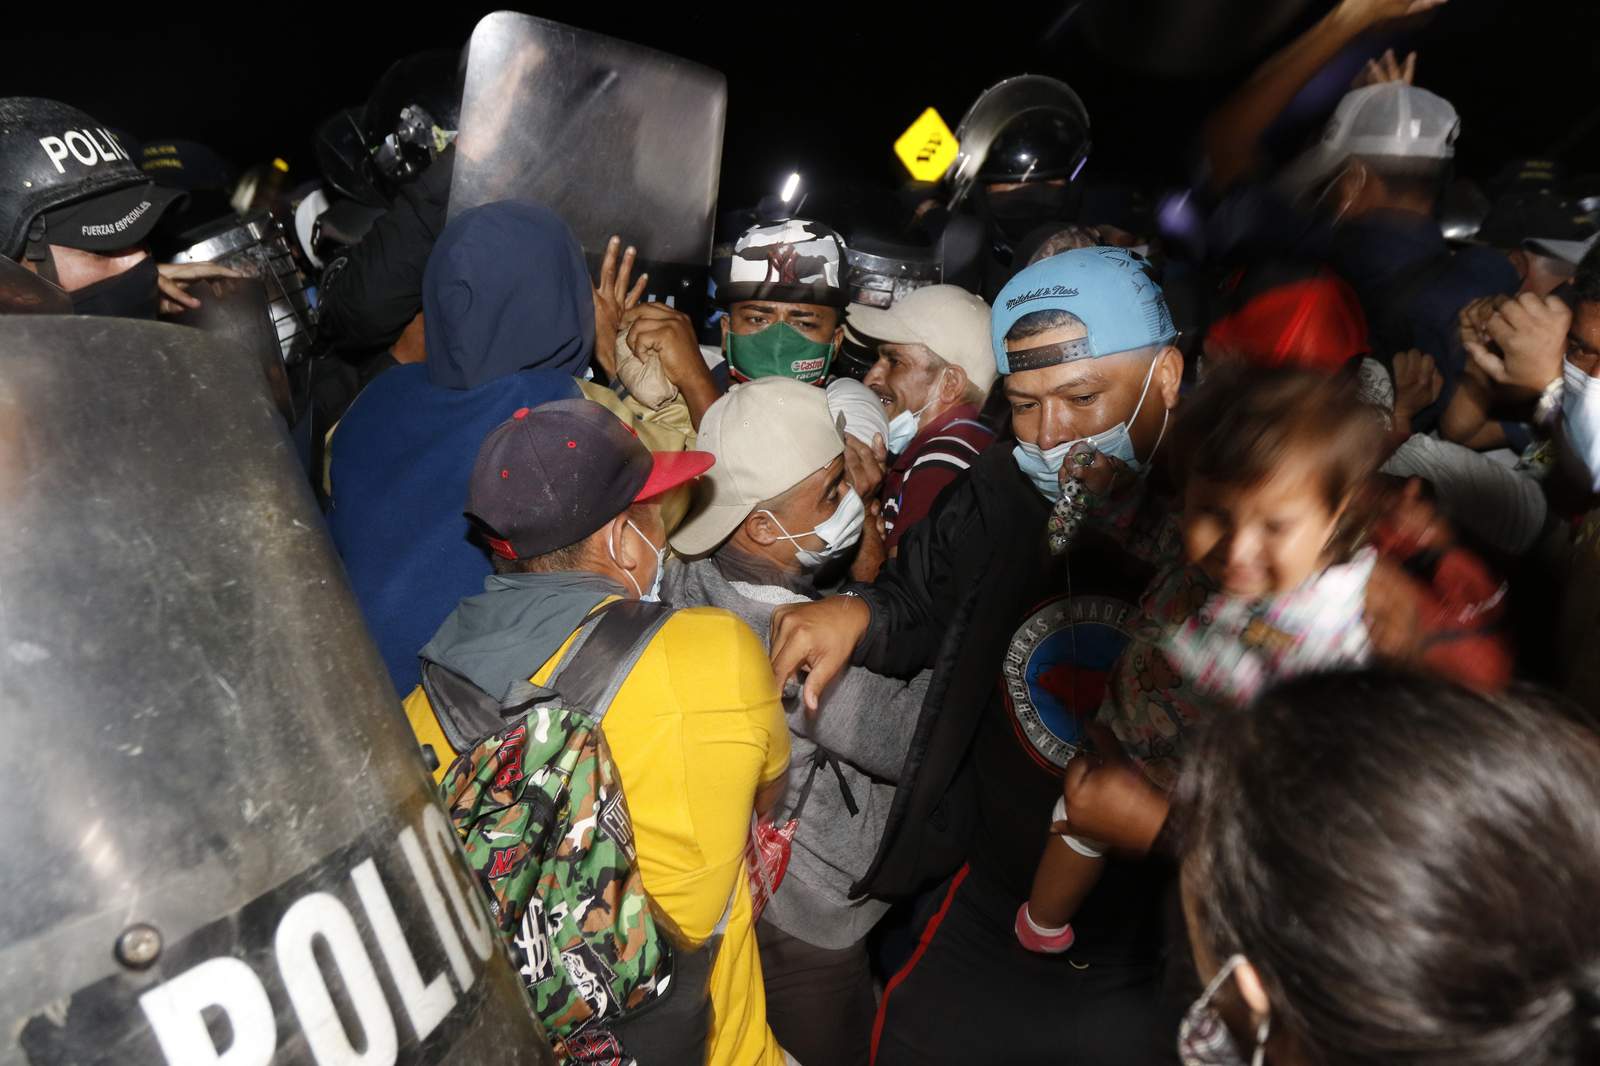 Migrant caravan on the move in Honduras in uncertain times